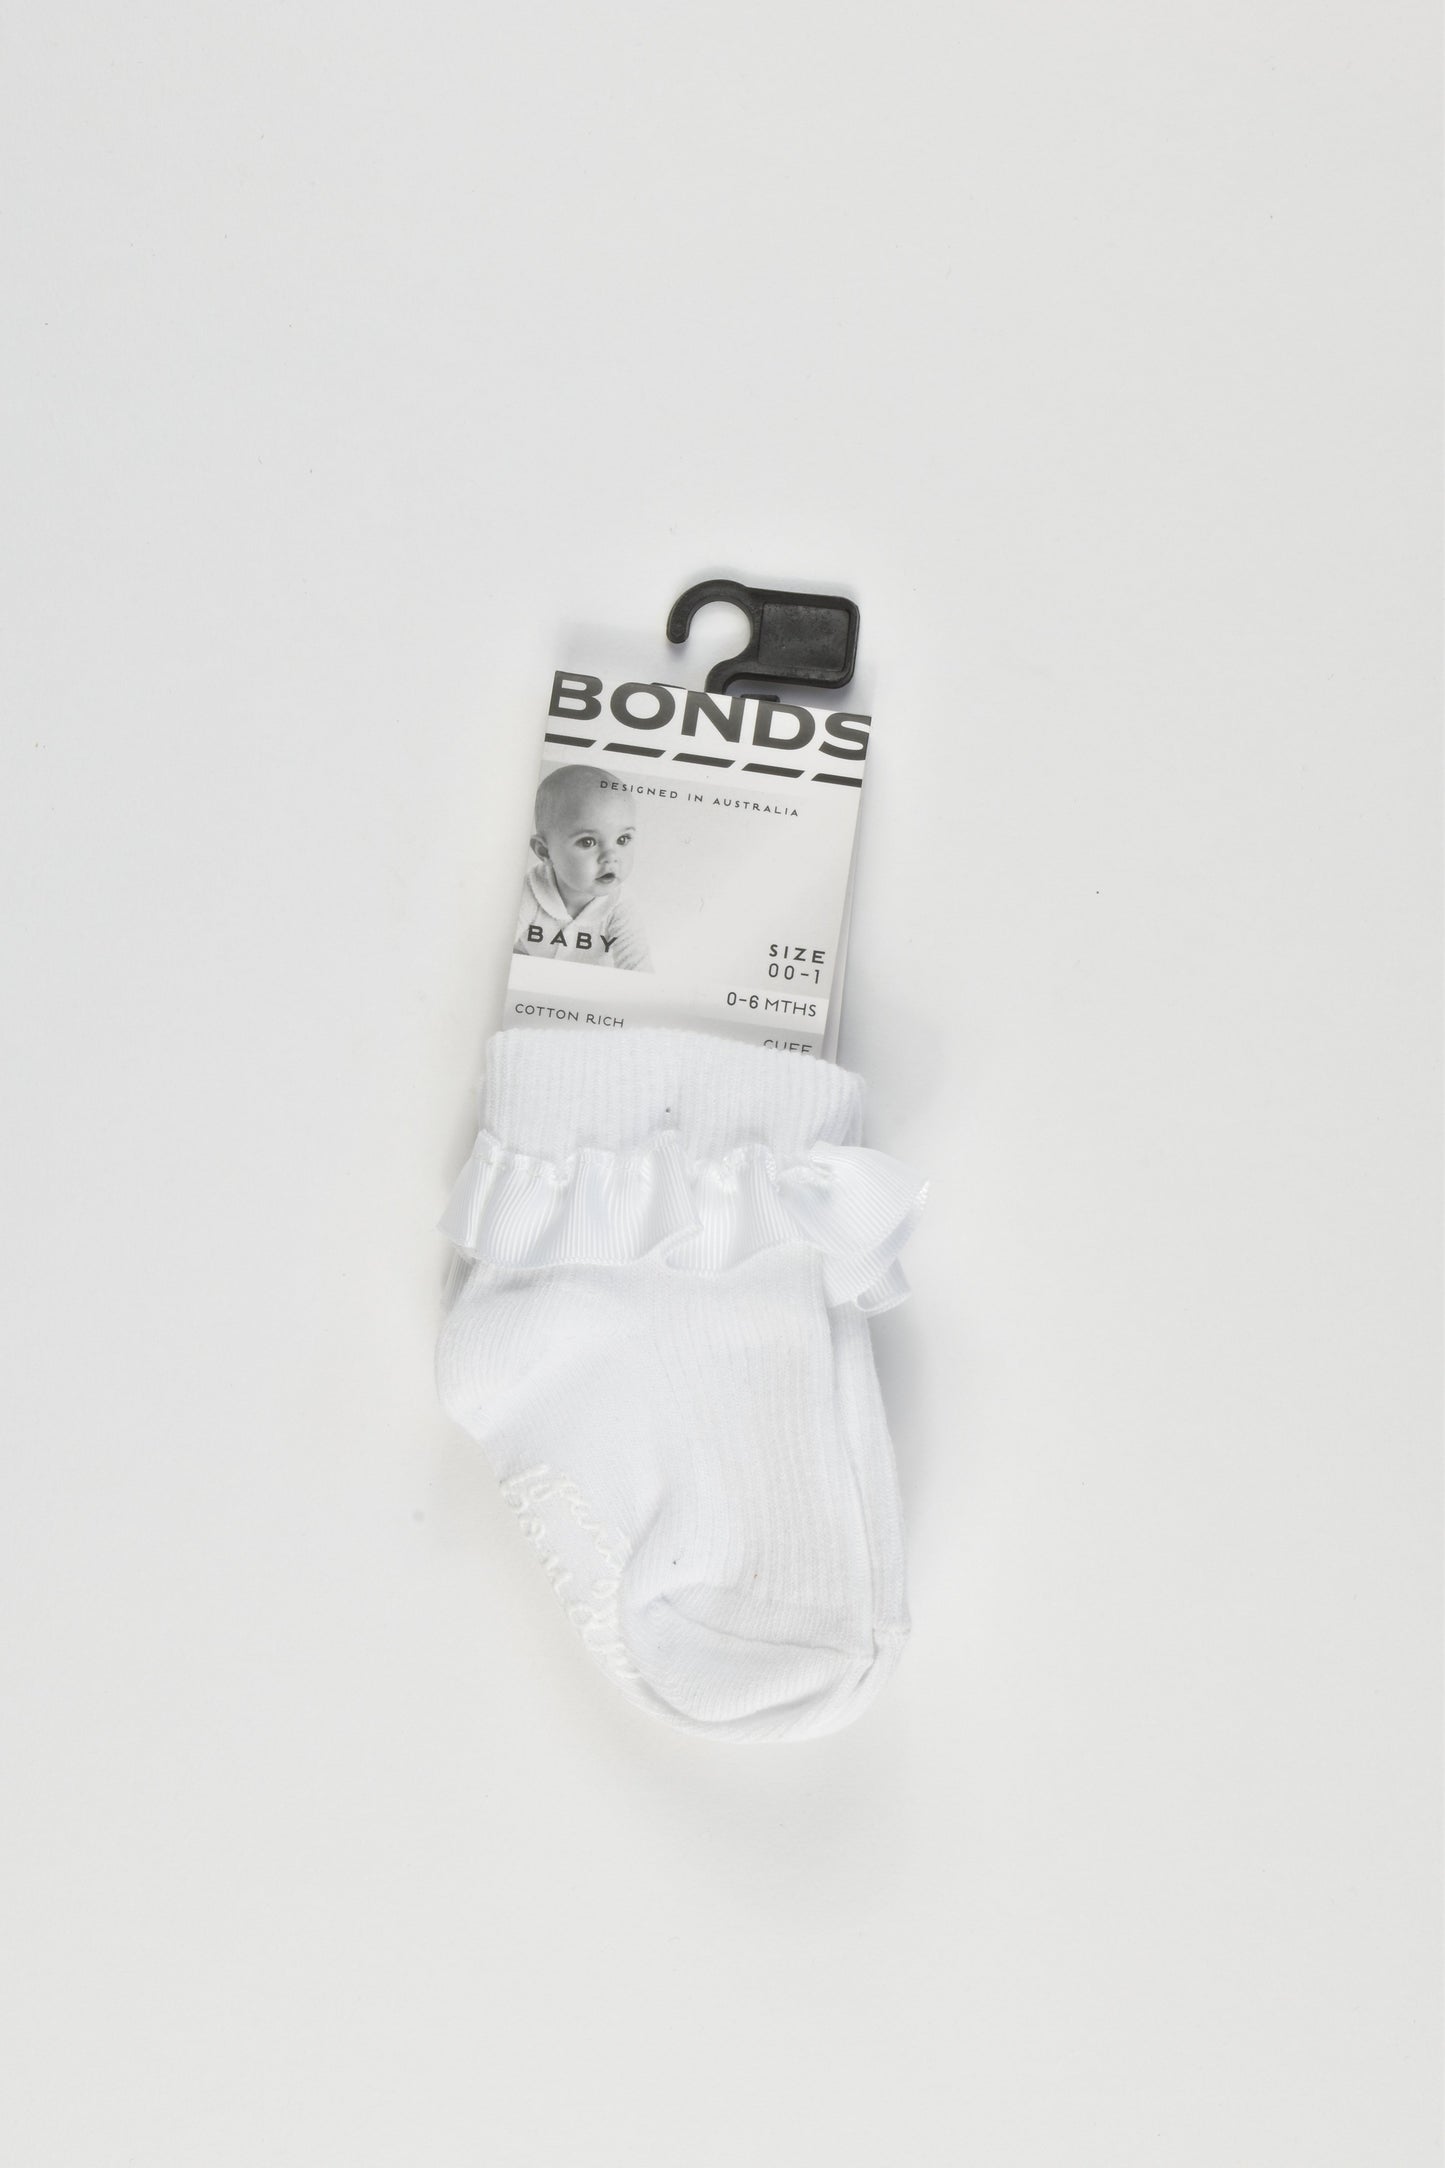 NEW Bonds Size 00-1 Socks